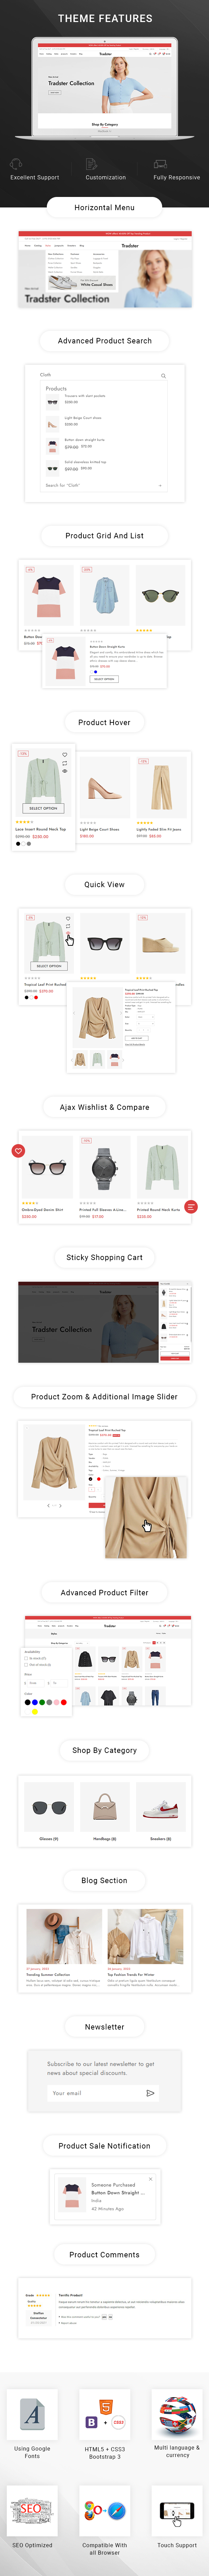 Tradster – Multi-Purpose Fashion Store Shopify 2.0 Responsive Theme